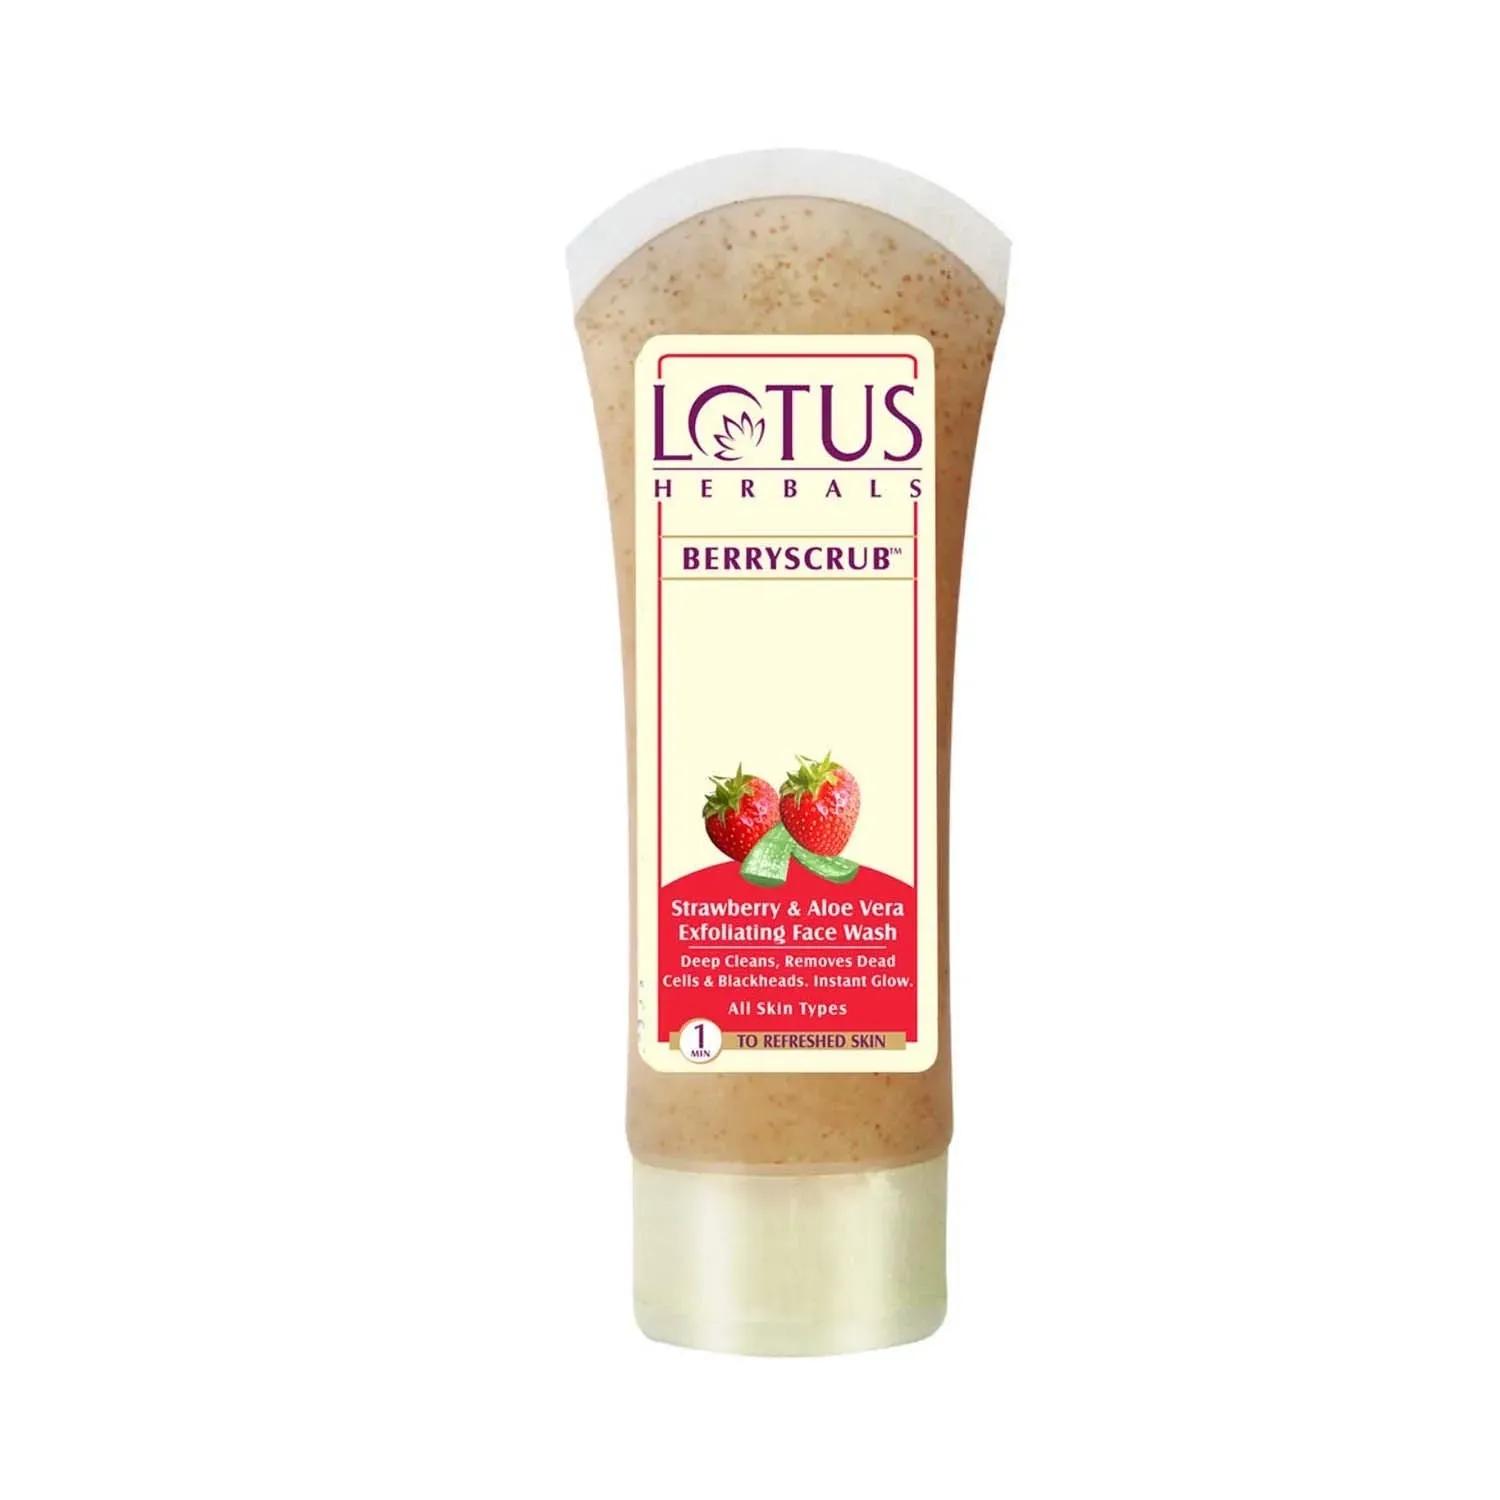 lotus herbals berryscrub strawberry & aloe vera exfoliating face wash - (80g)